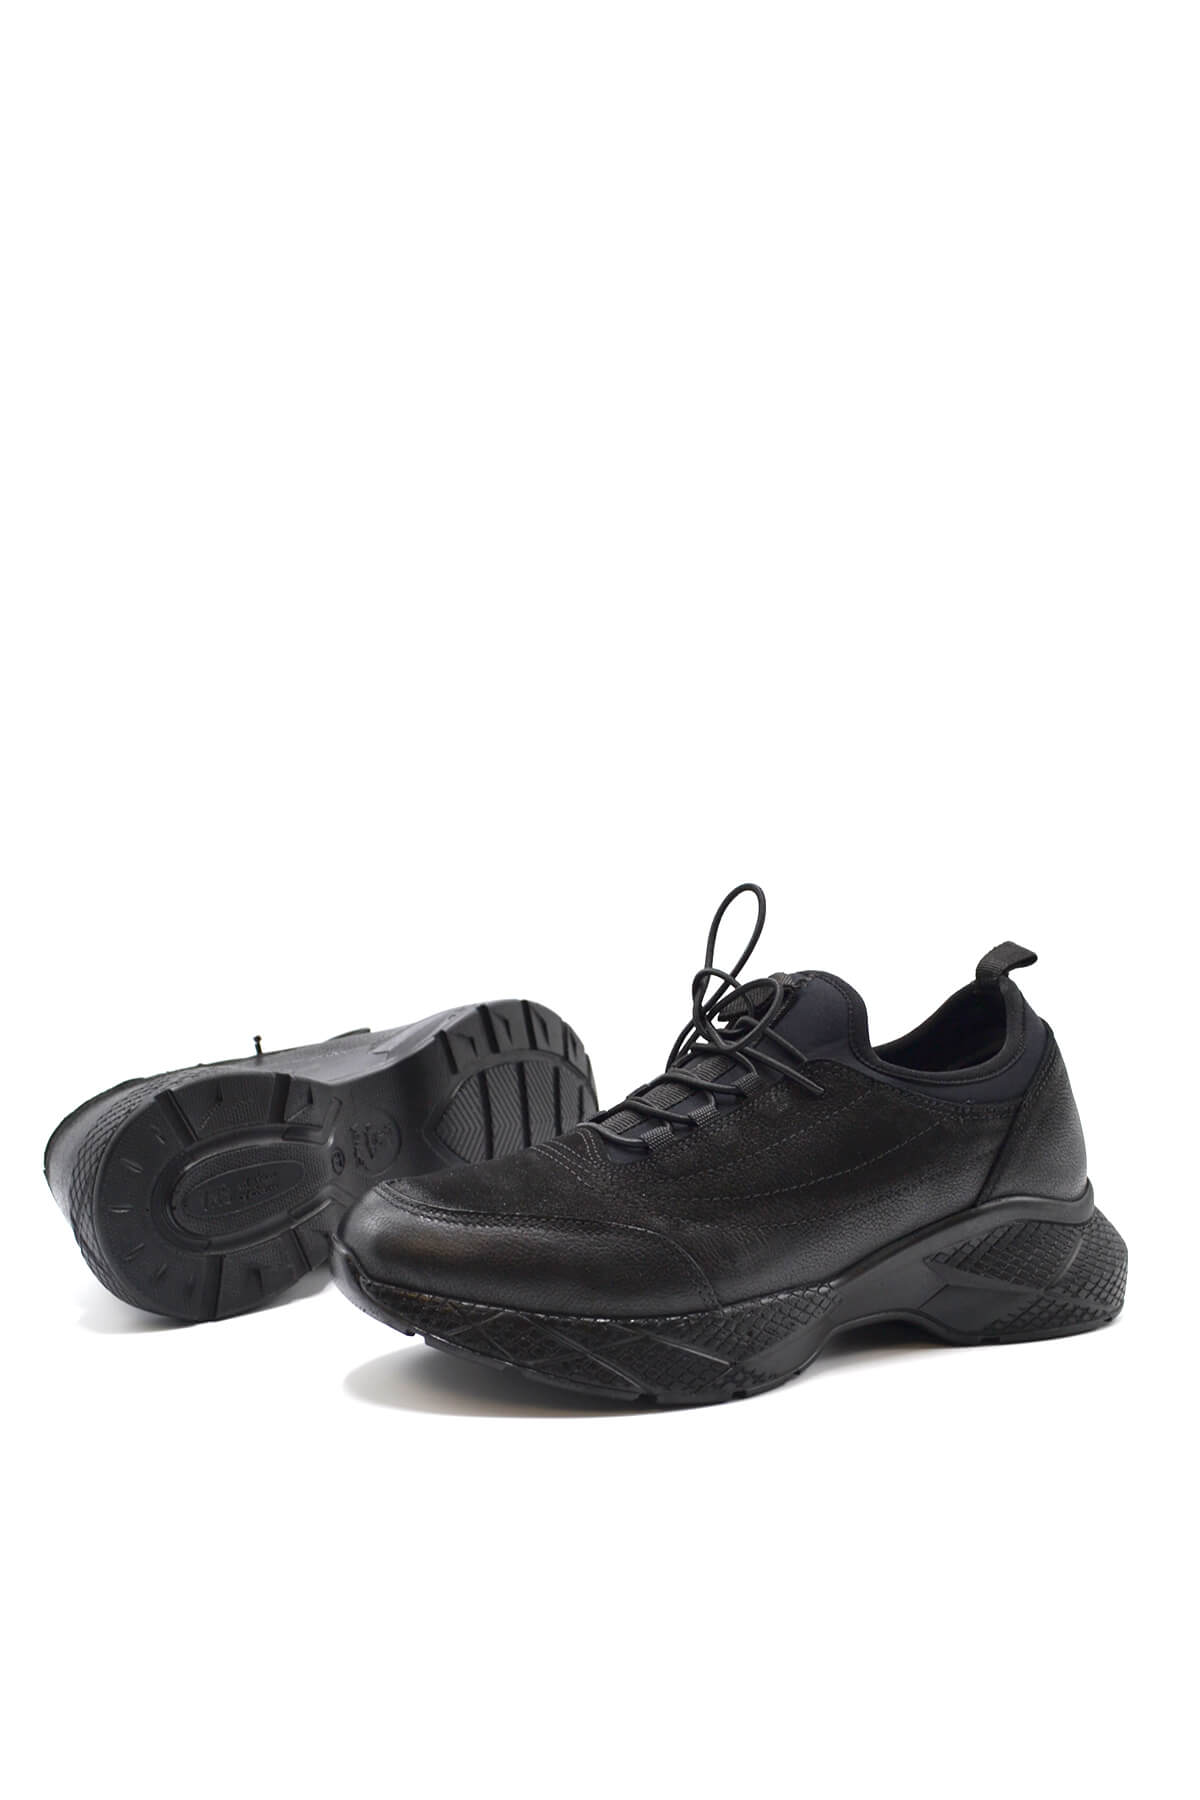 Kadın Comfort Deri Sneakers Airflow Ayakkabı Siyah 2216603K - Thumbnail